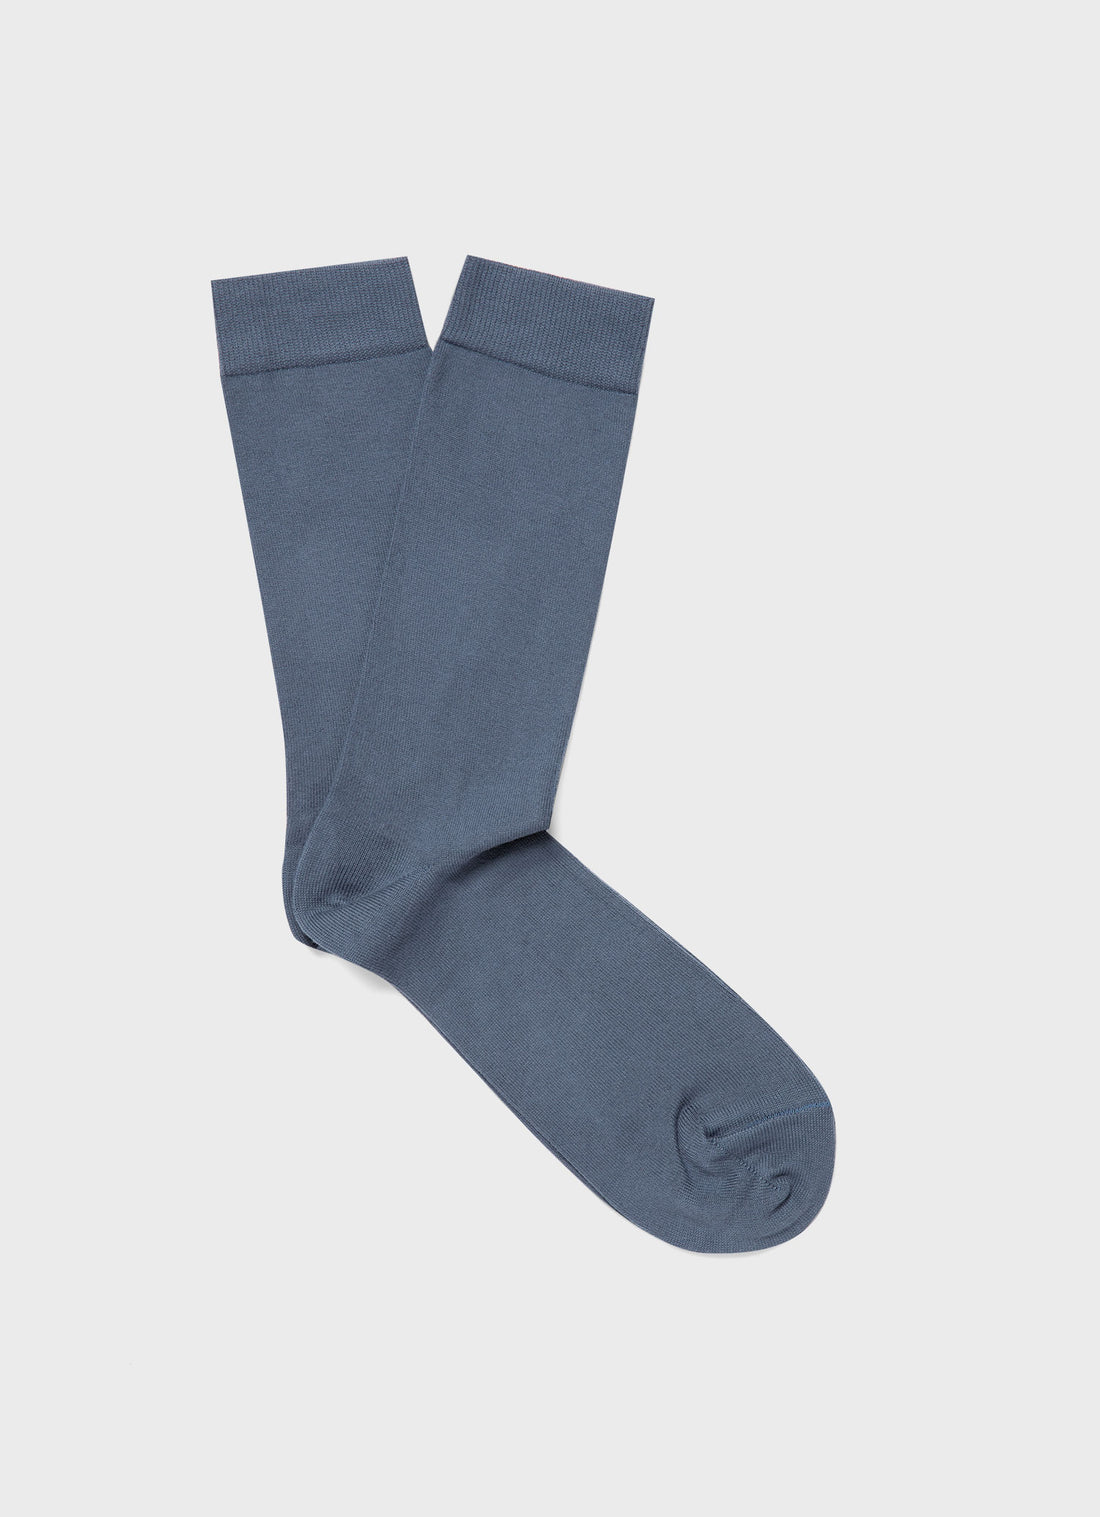 Men's Cotton Socks in Slate Blue